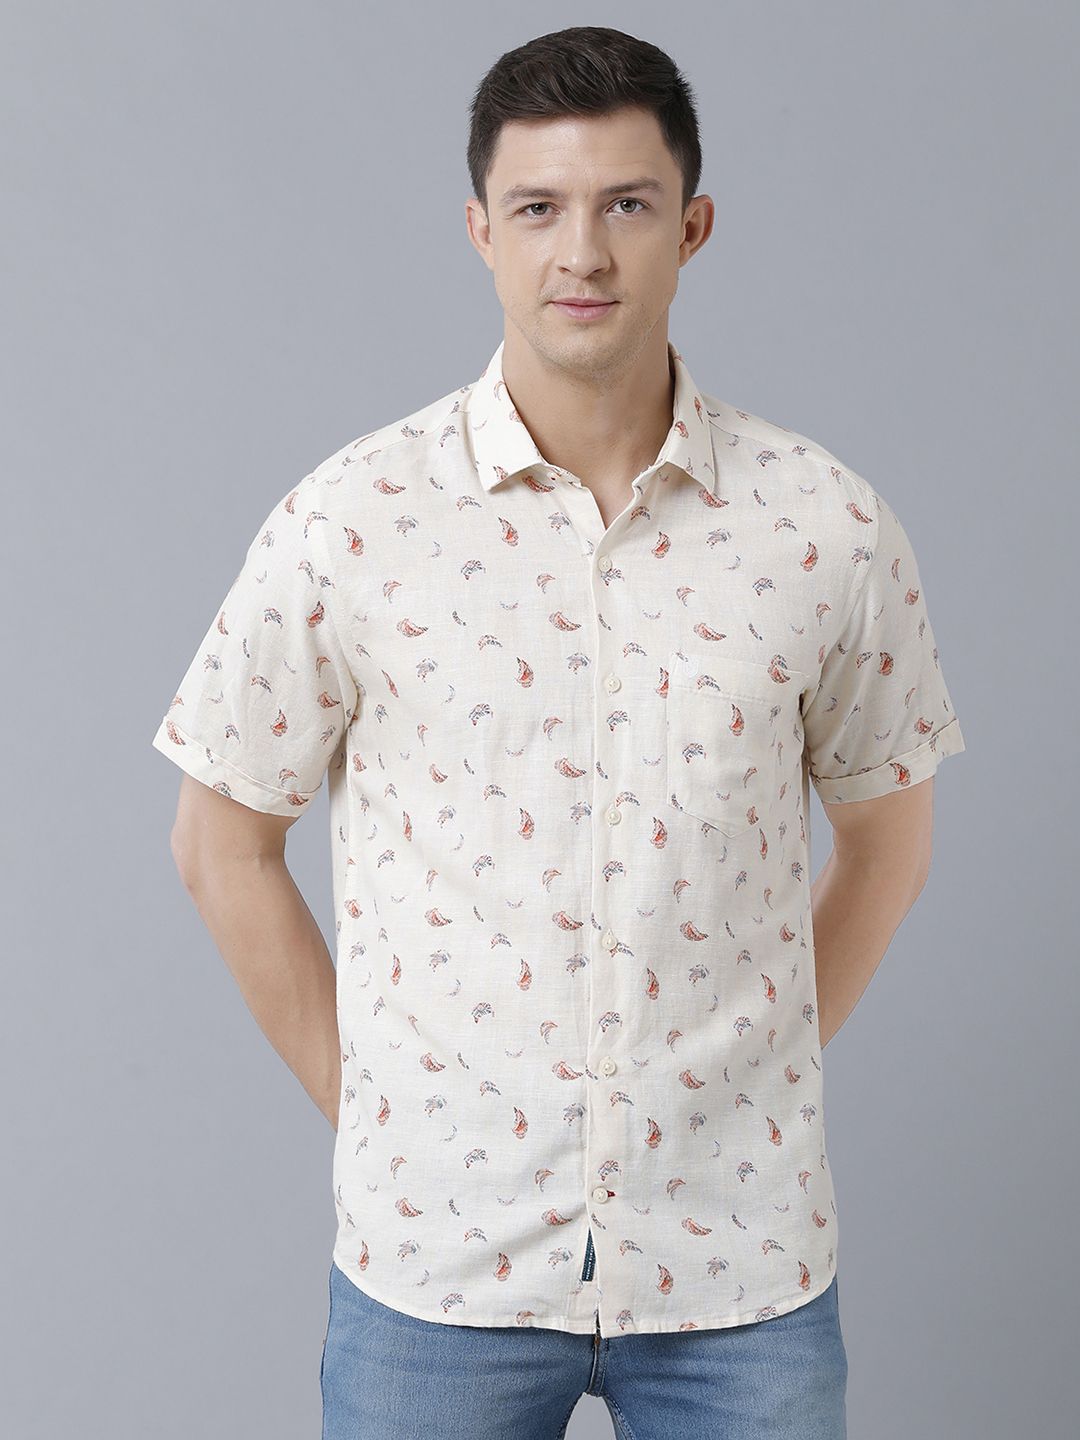 Men's Semi-Sheer Floral Shirt White